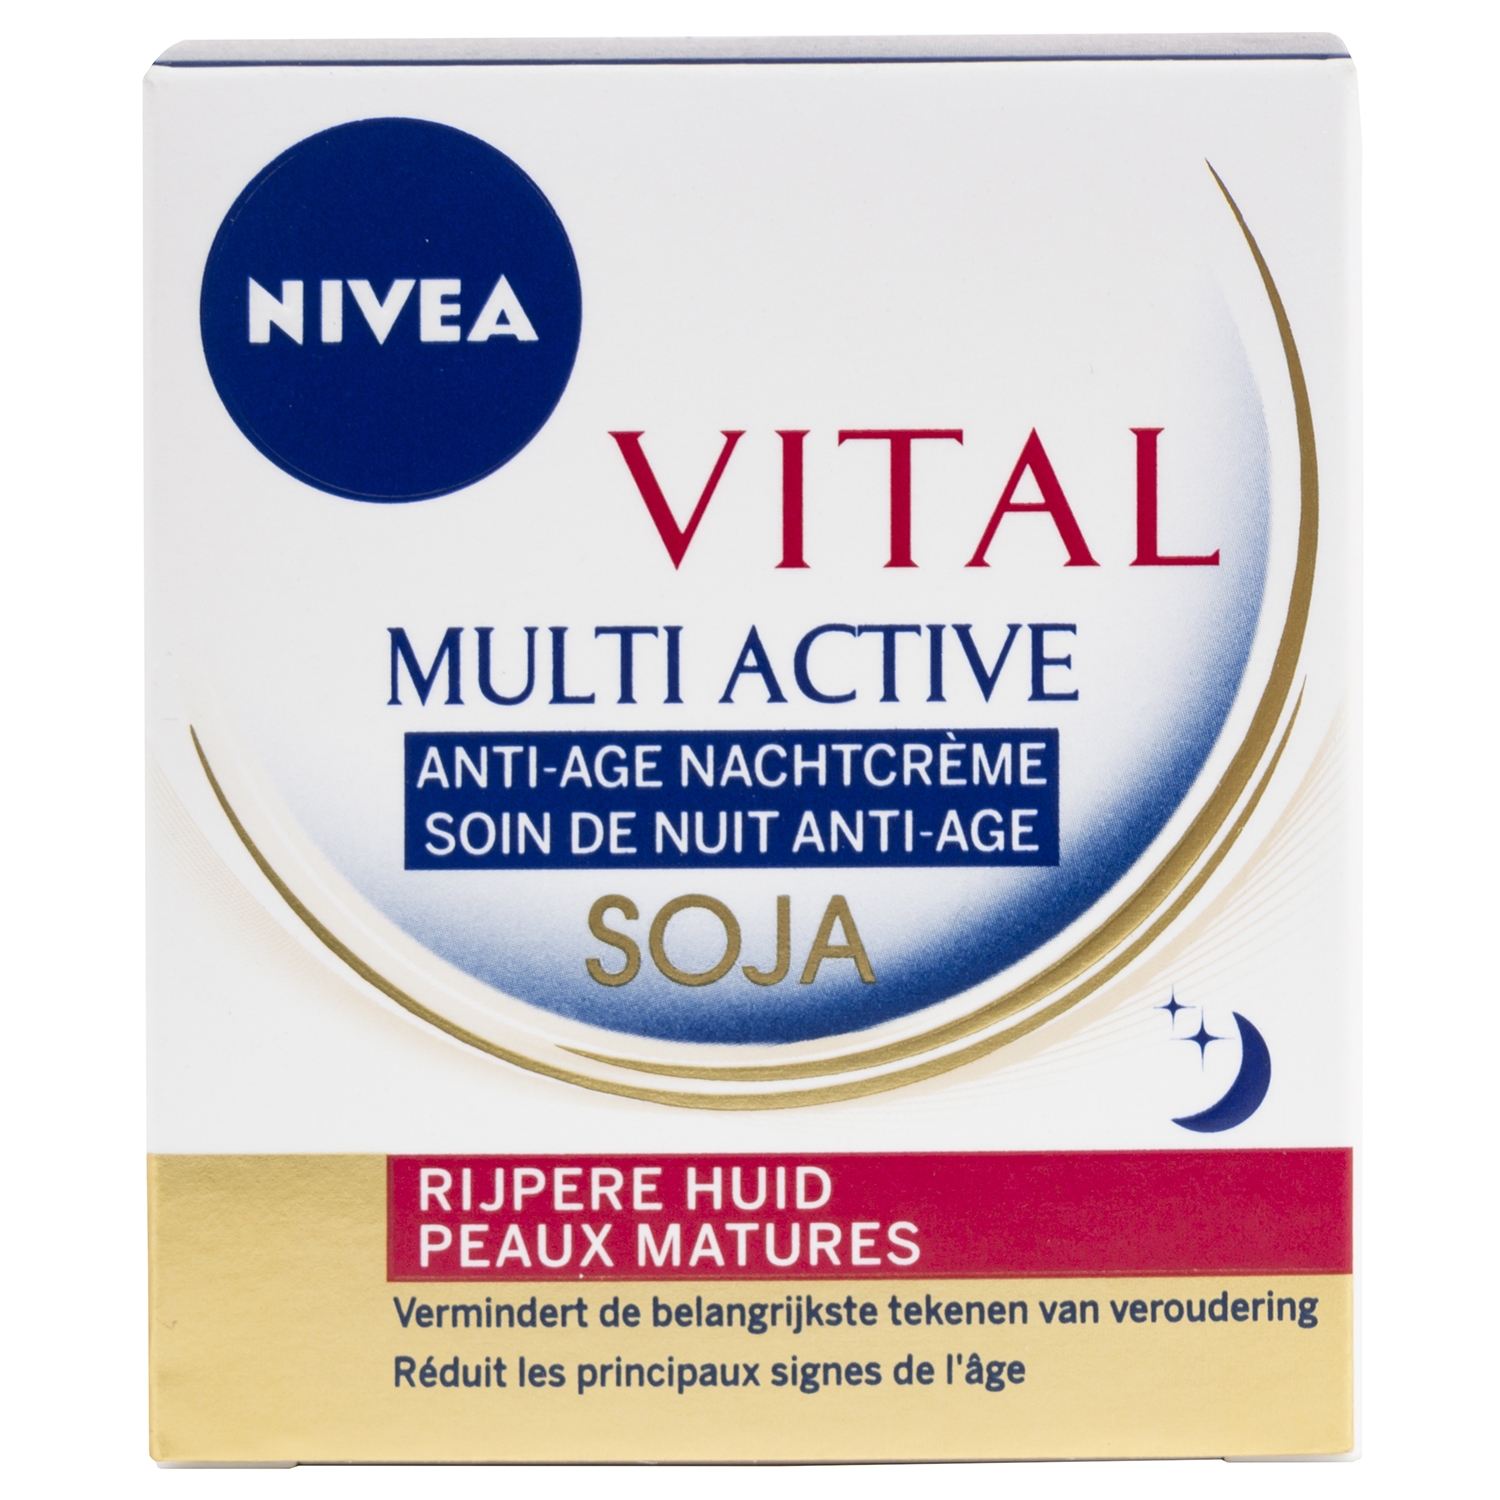 Nivea Vital Soja Anti-Age -  nachtcrme- rijpere huid  - 50 ml (einde voorraad)